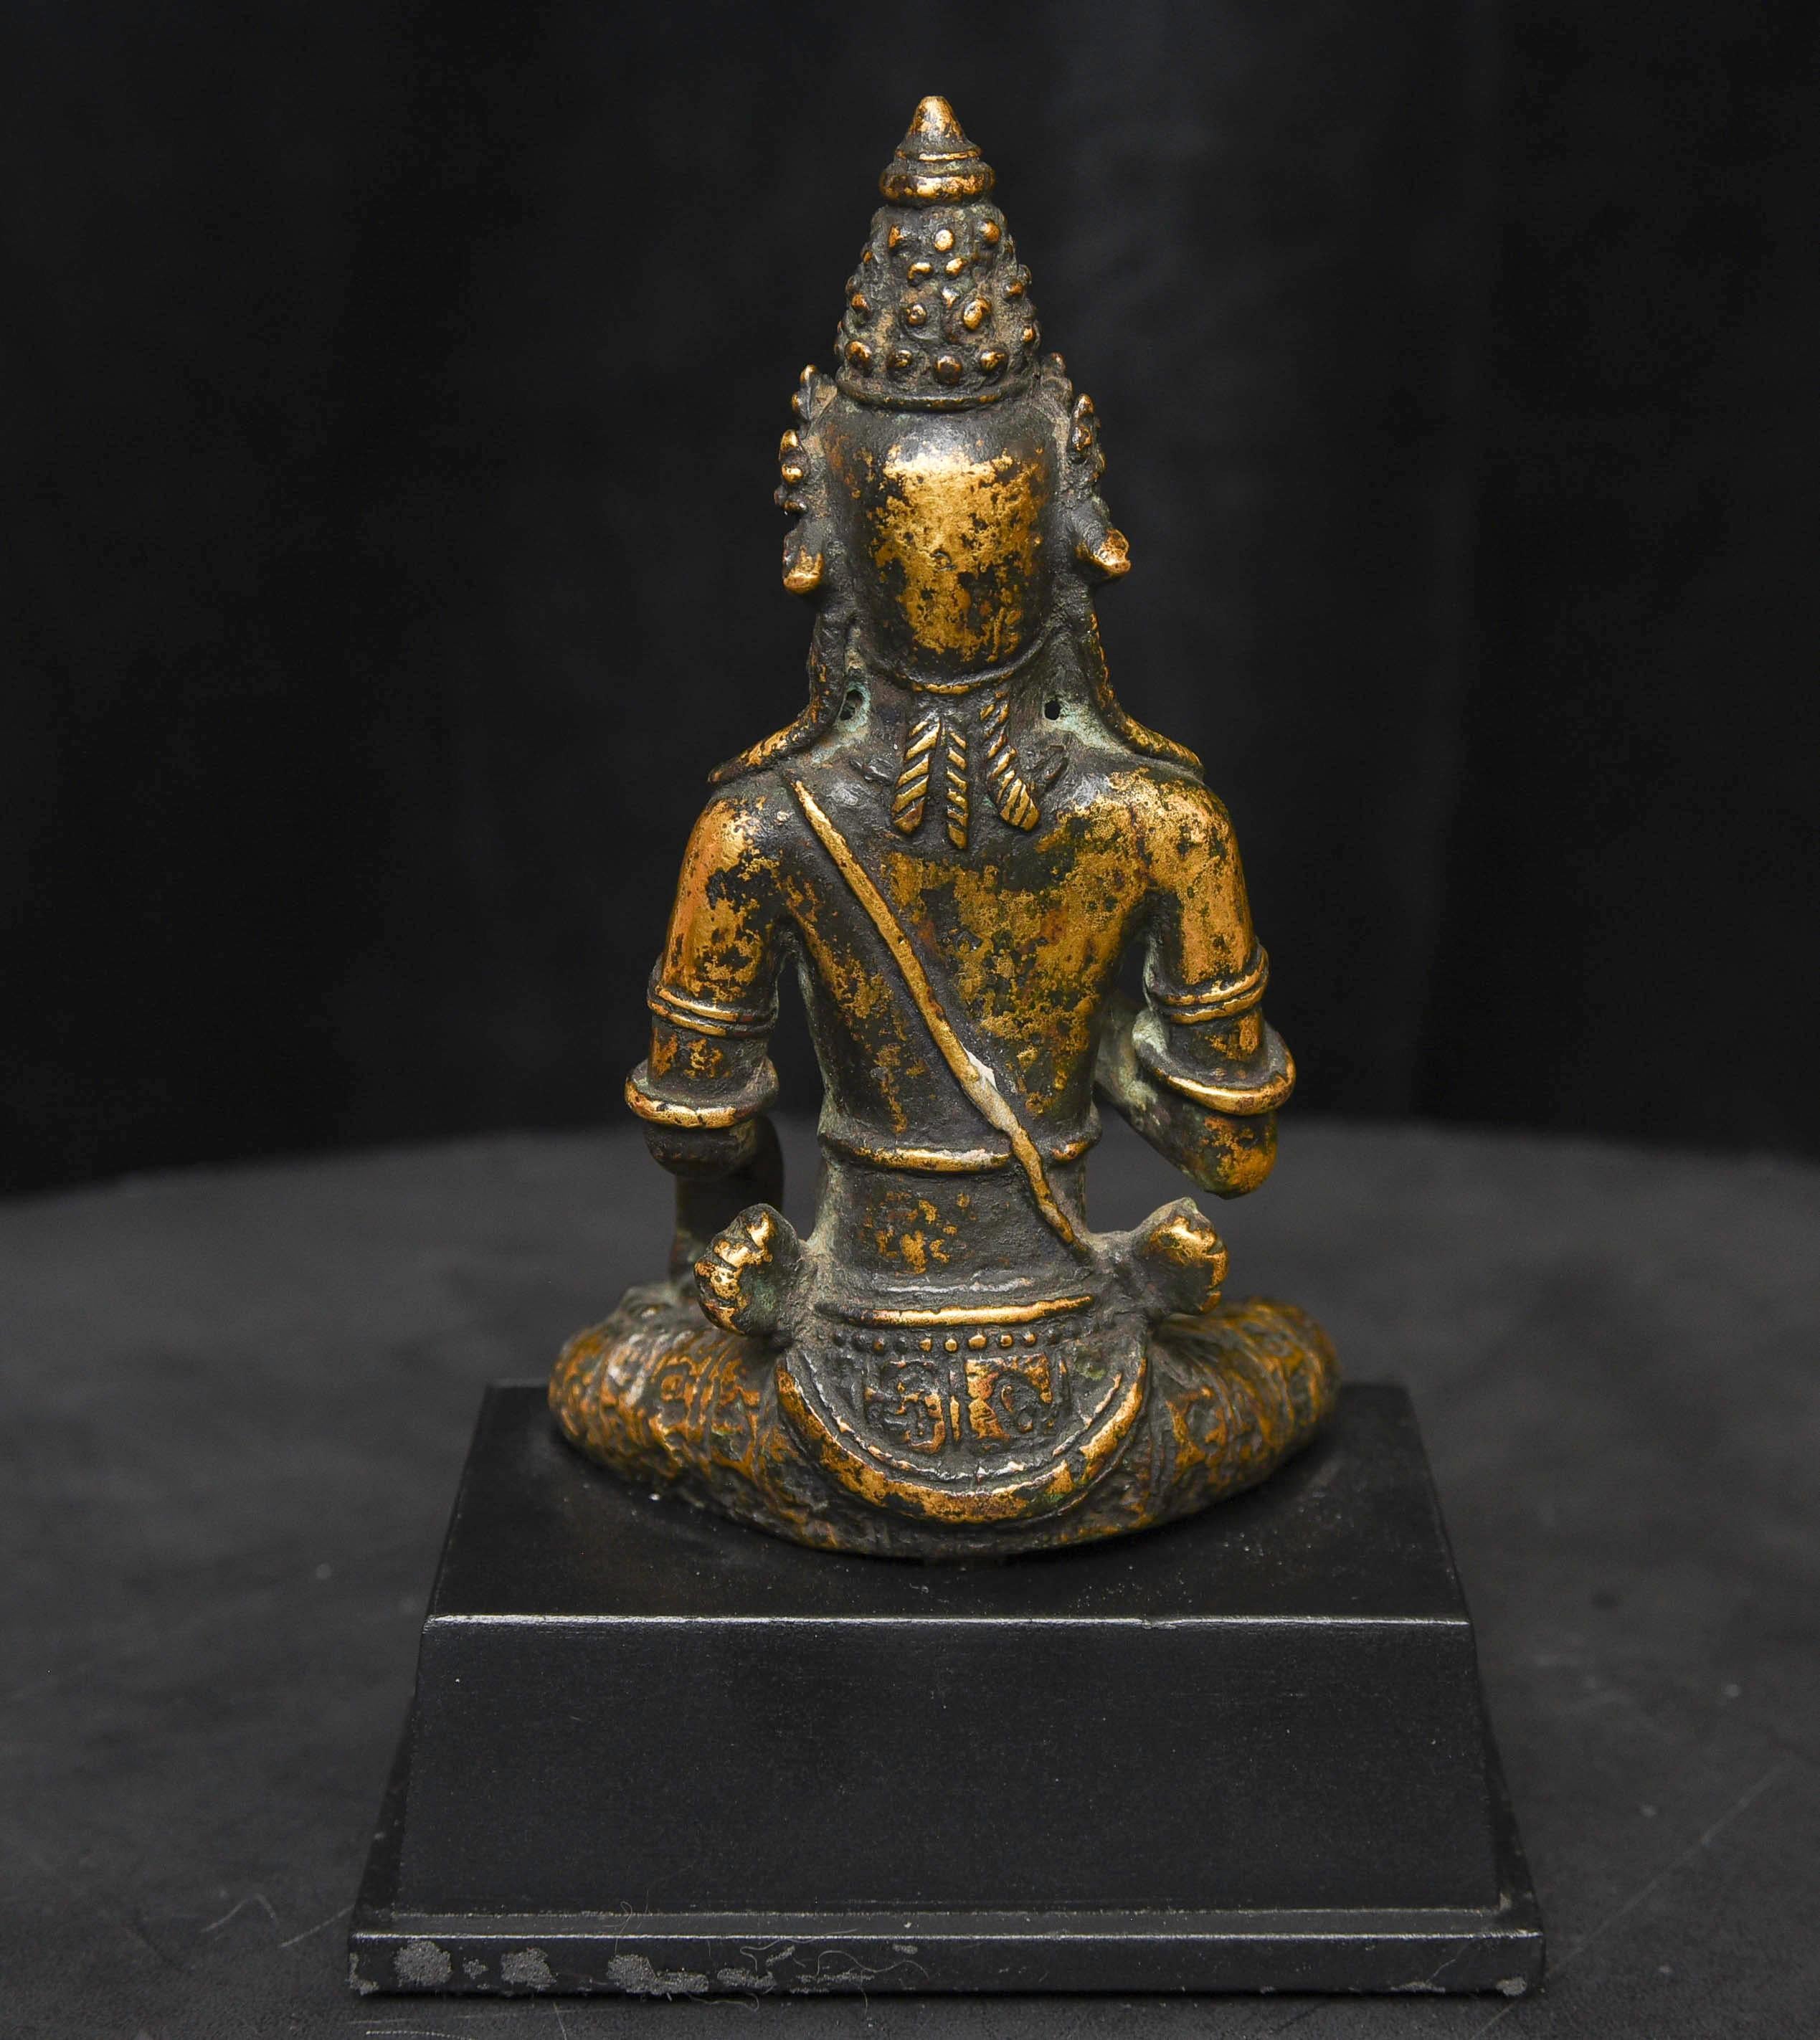 15-19thC Indonesian or Javanese Gilt Bronze Deities - 9591 For Sale 3